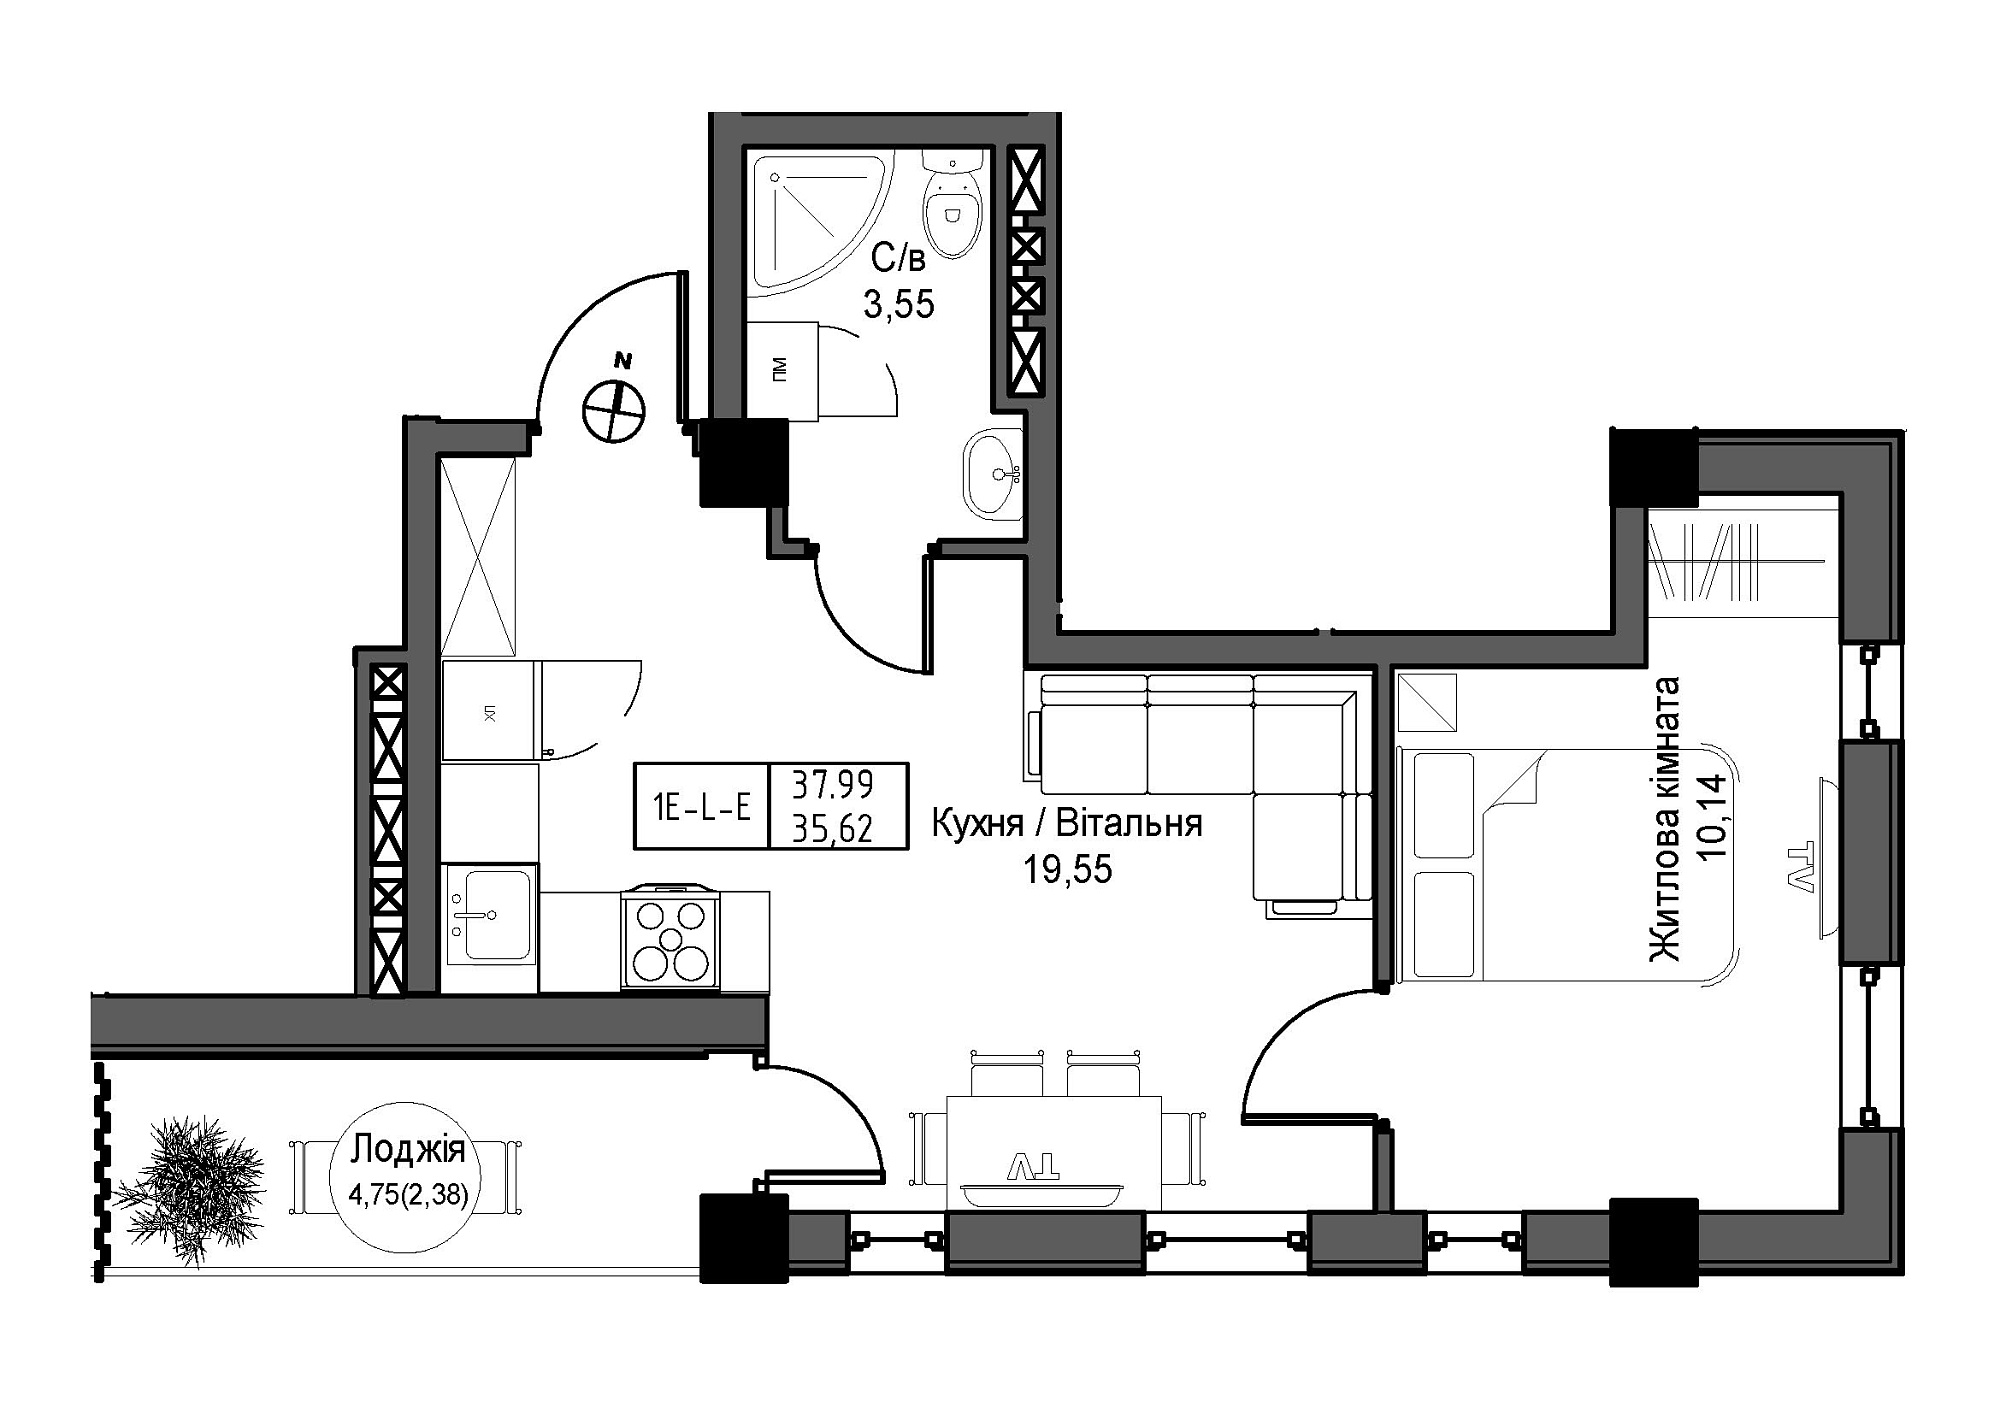 Планування 1-к квартира площею 35.62м2, UM-007-04/0009.